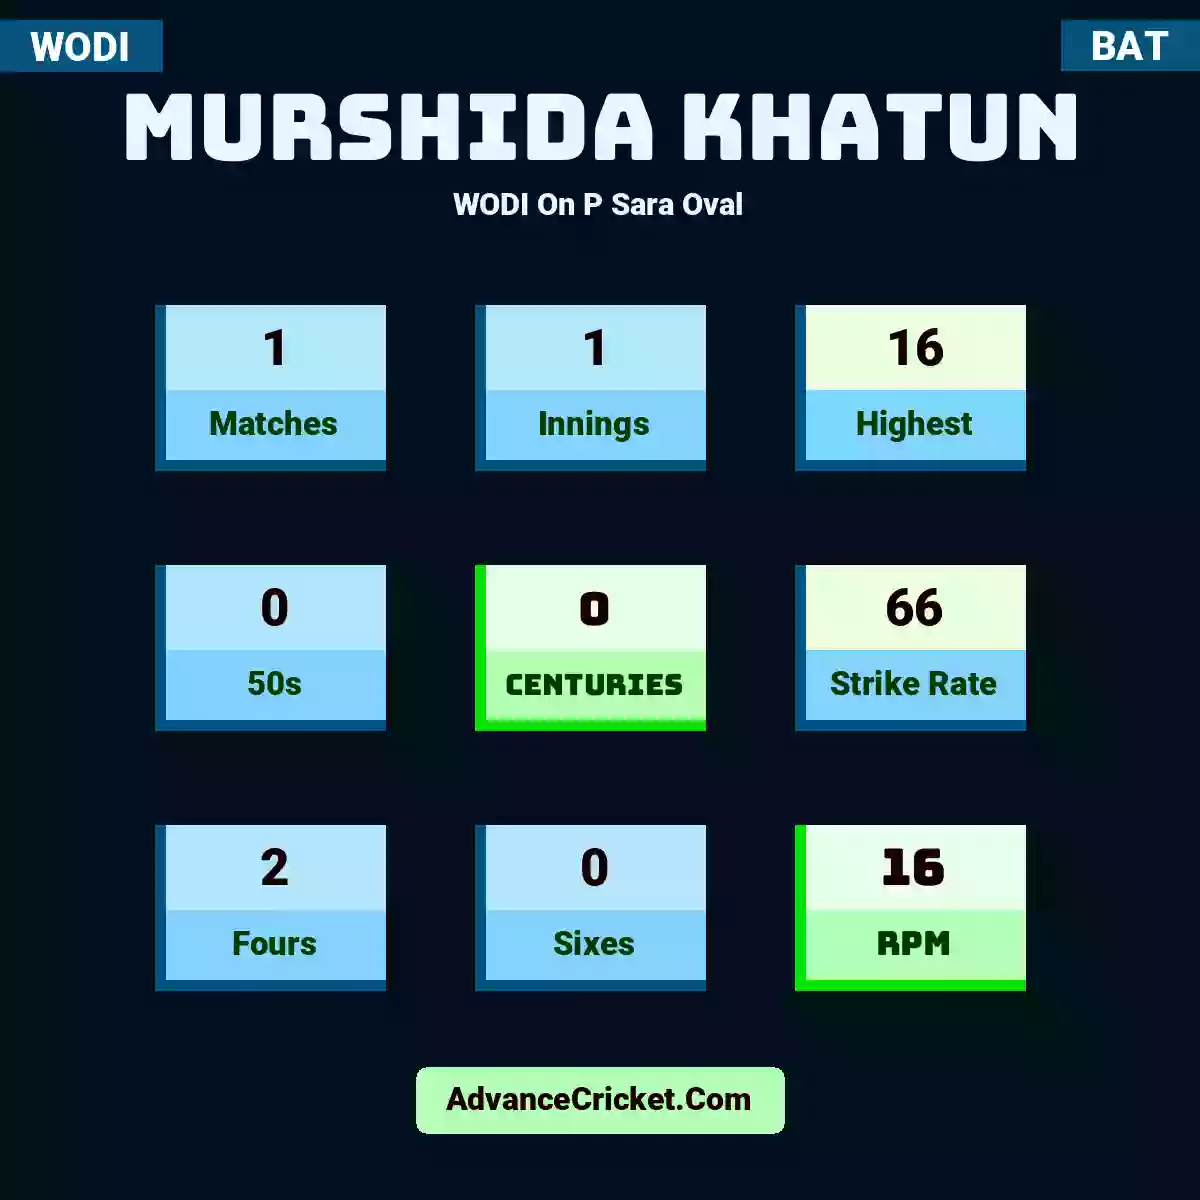 Murshida Khatun WODI  On P Sara Oval, Murshida Khatun played 1 matches, scored 16 runs as highest, 0 half-centuries, and 0 centuries, with a strike rate of 66. M.Khatun hit 2 fours and 0 sixes, with an RPM of 16.